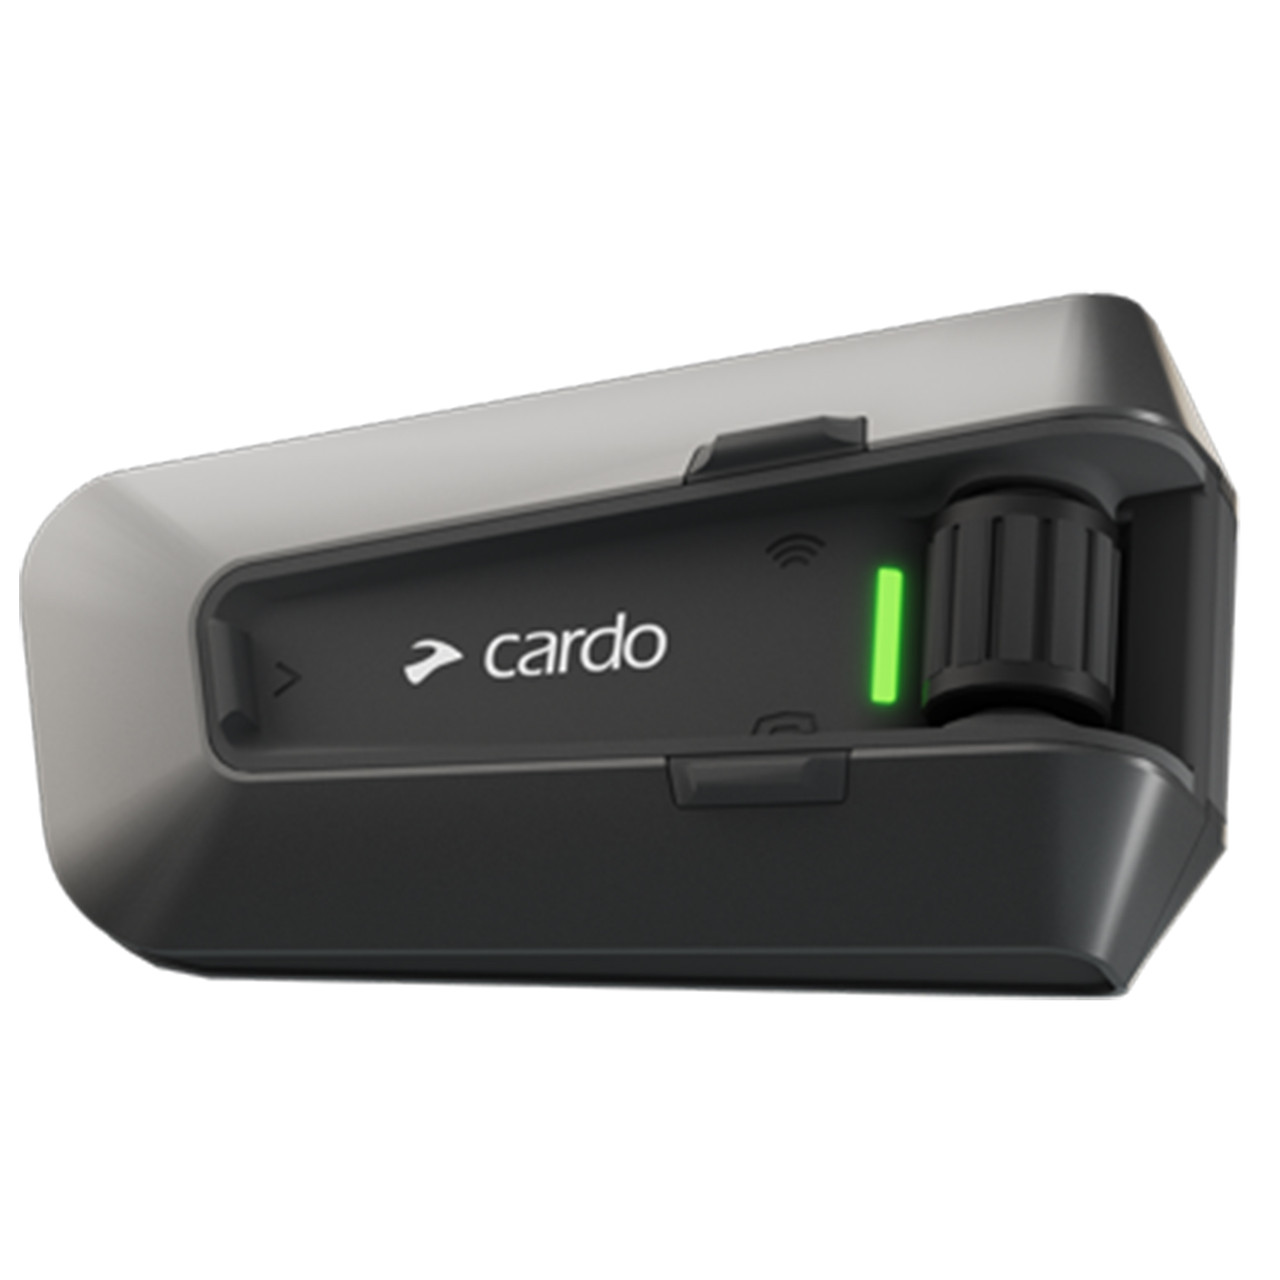 Cardo Packtalk Edge ORV Edition Bluetooth Headset Single - Speed